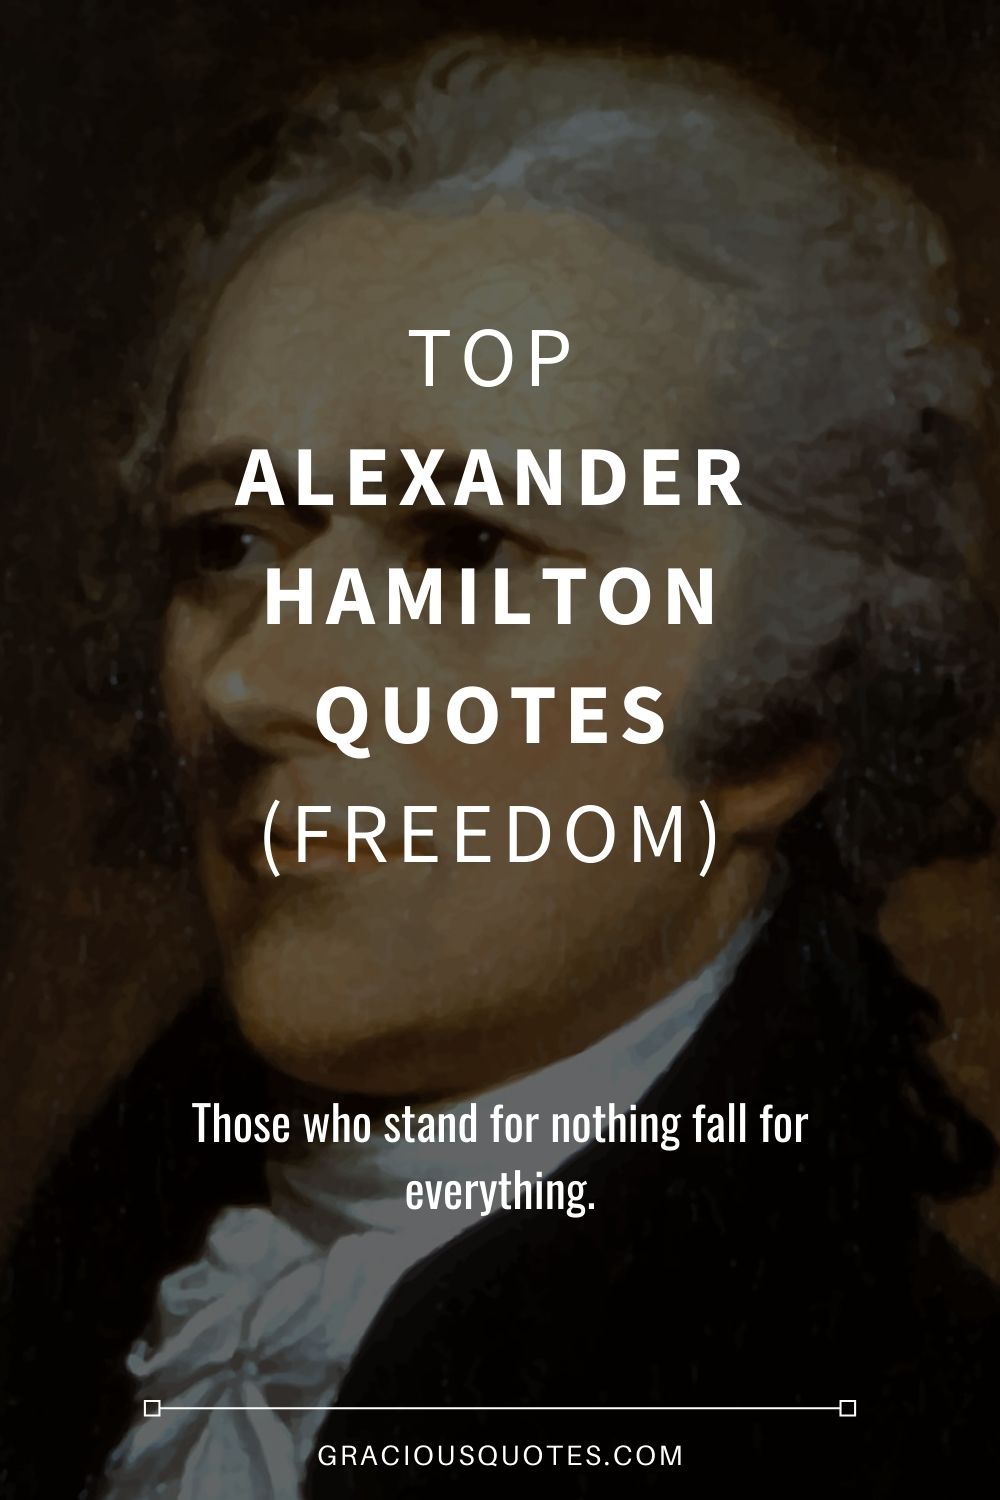 Top Alexander Hamilton Quotes (FREEDOM) - Gracious Quotes